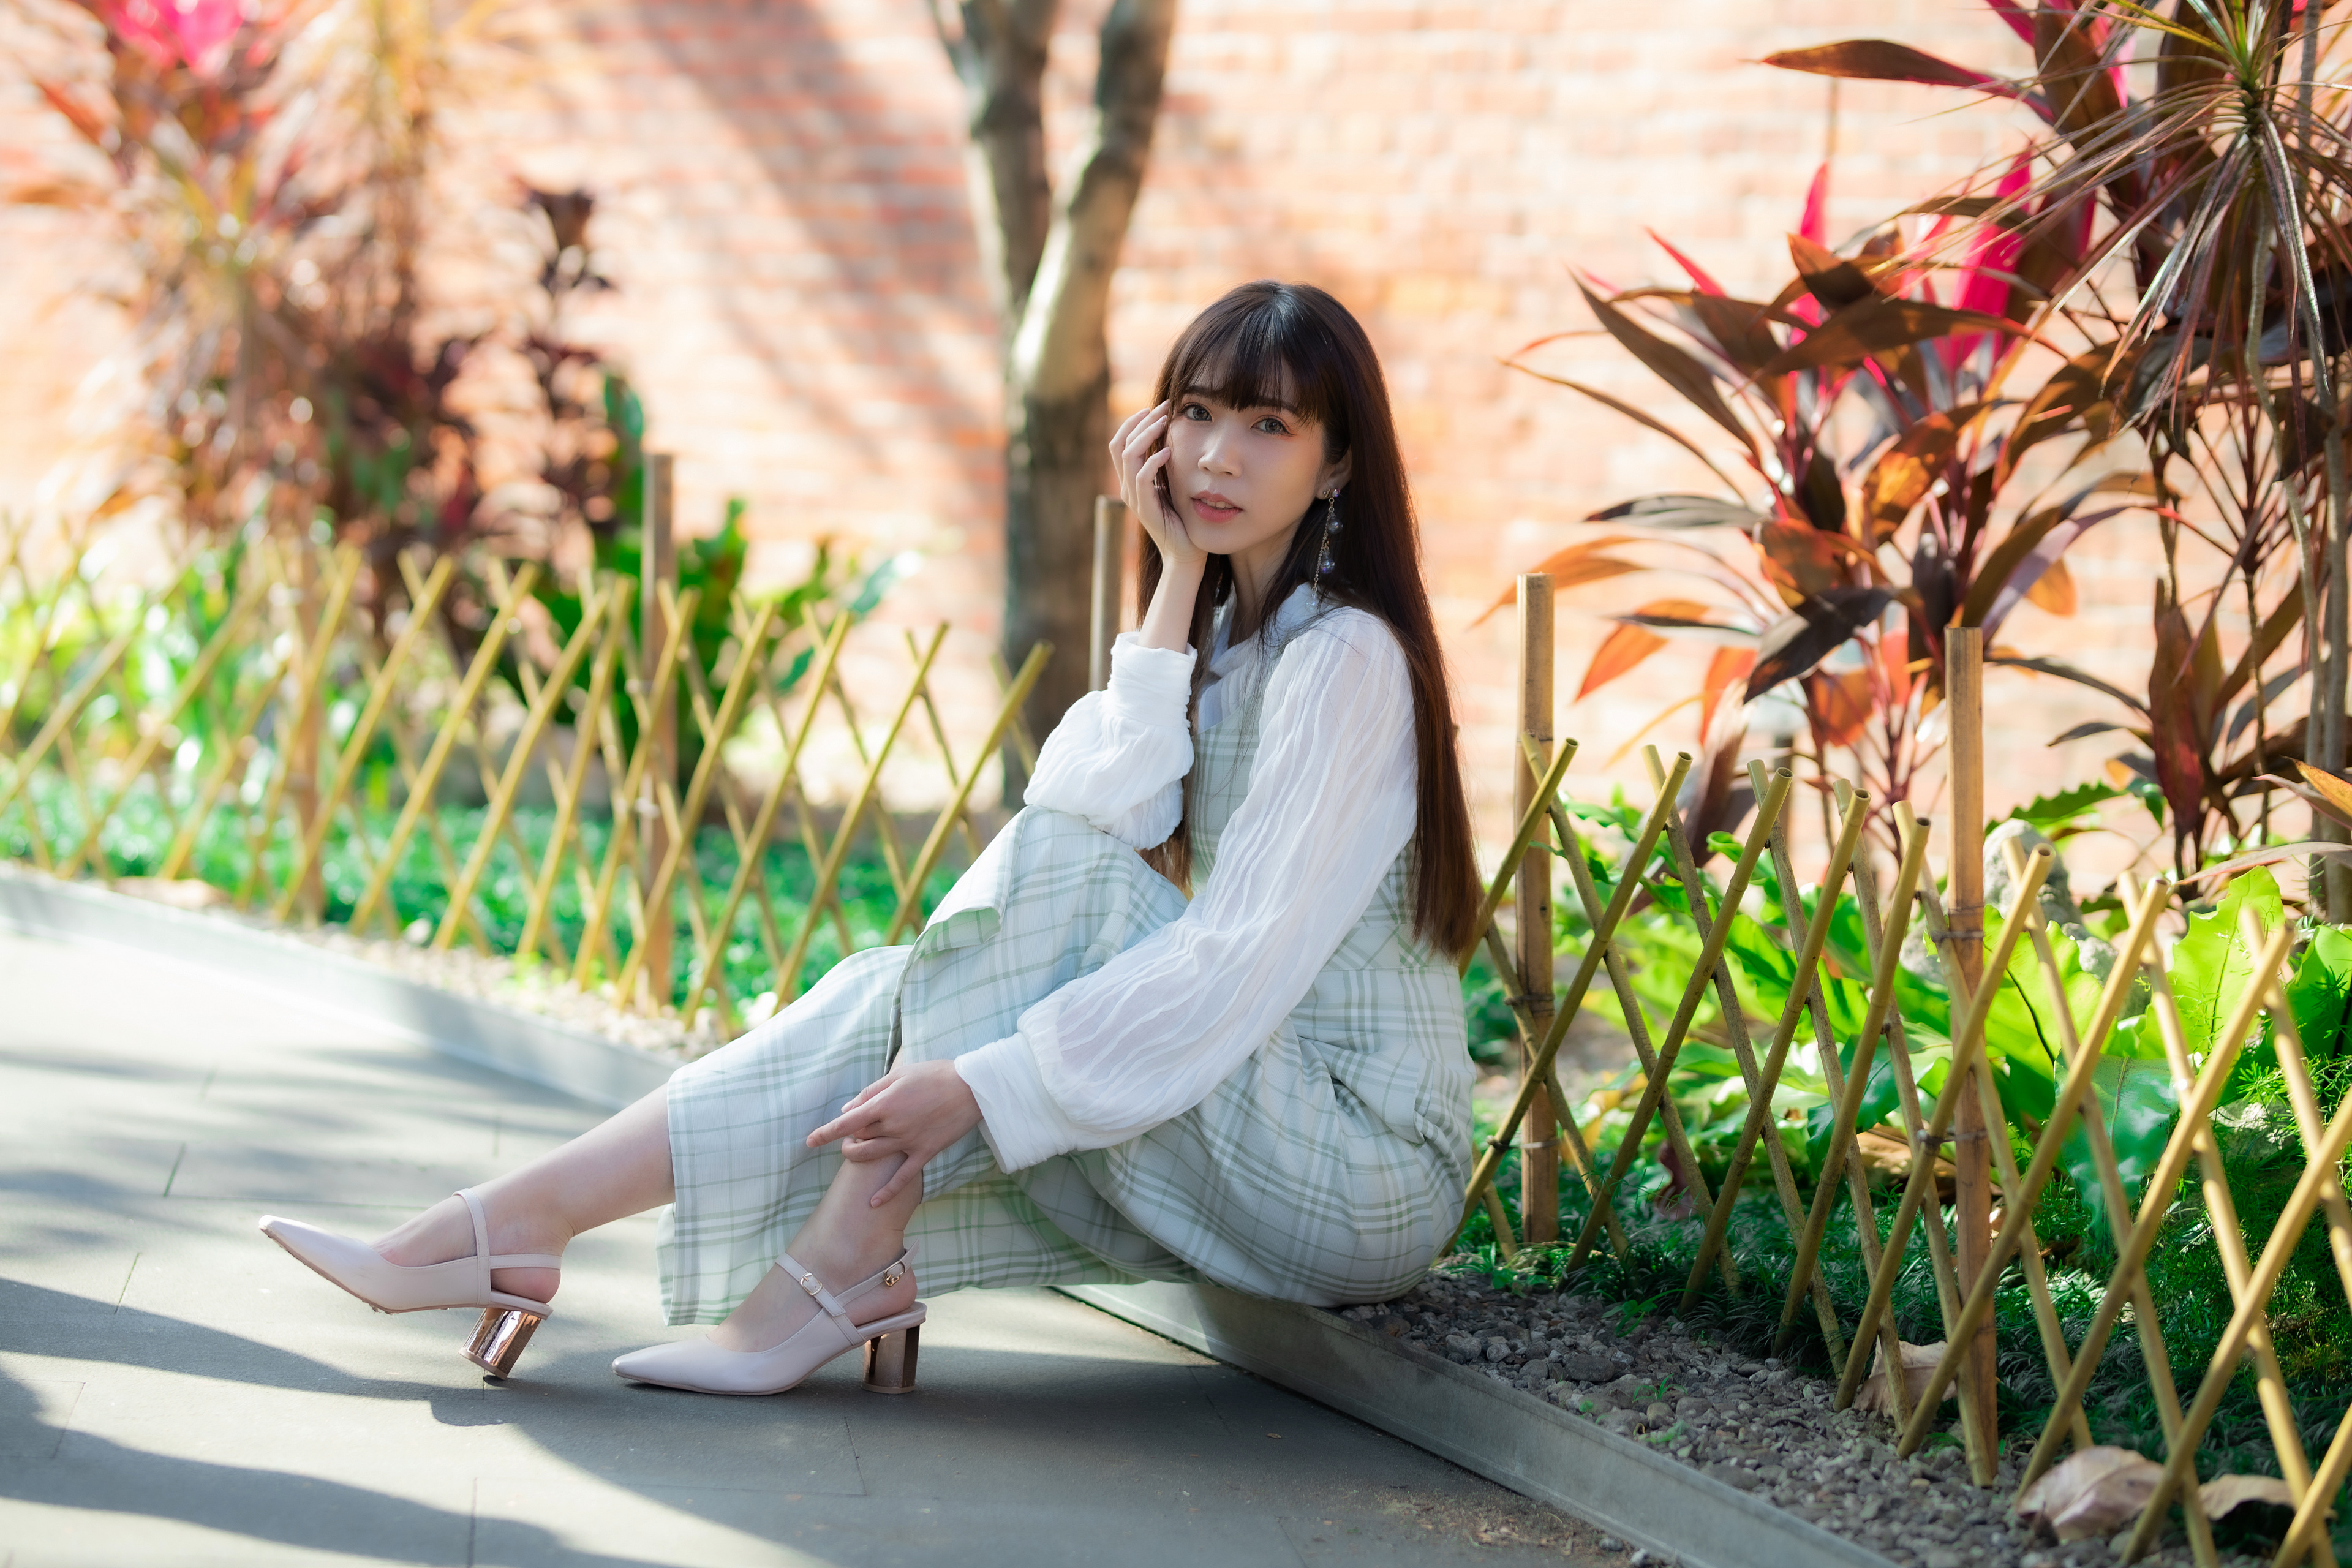 Asian Model Women Long Hair Brunette Depth Of Field Sitting Dress White Shoes Fence Grass Trees Plan 3840x2560